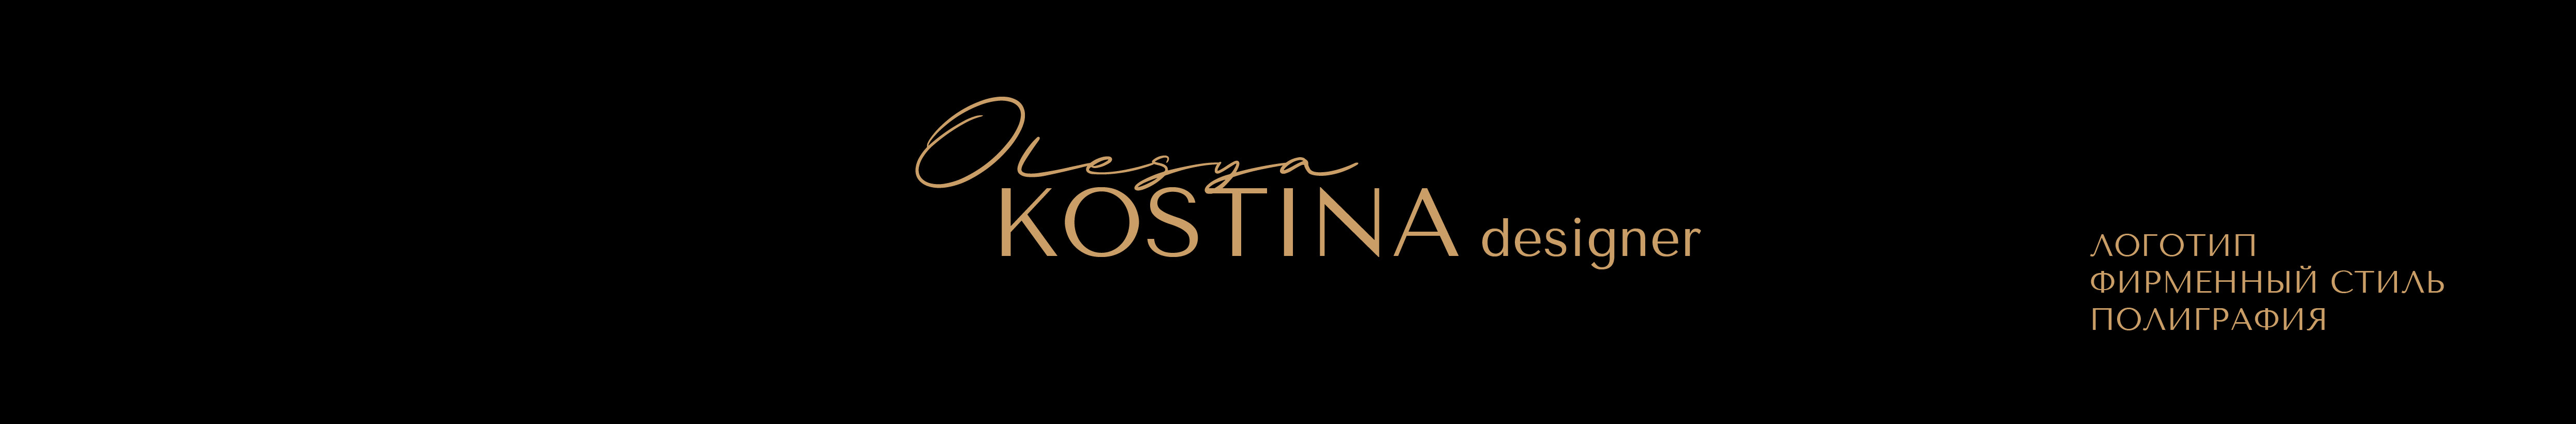 Олеся Костина's profile banner